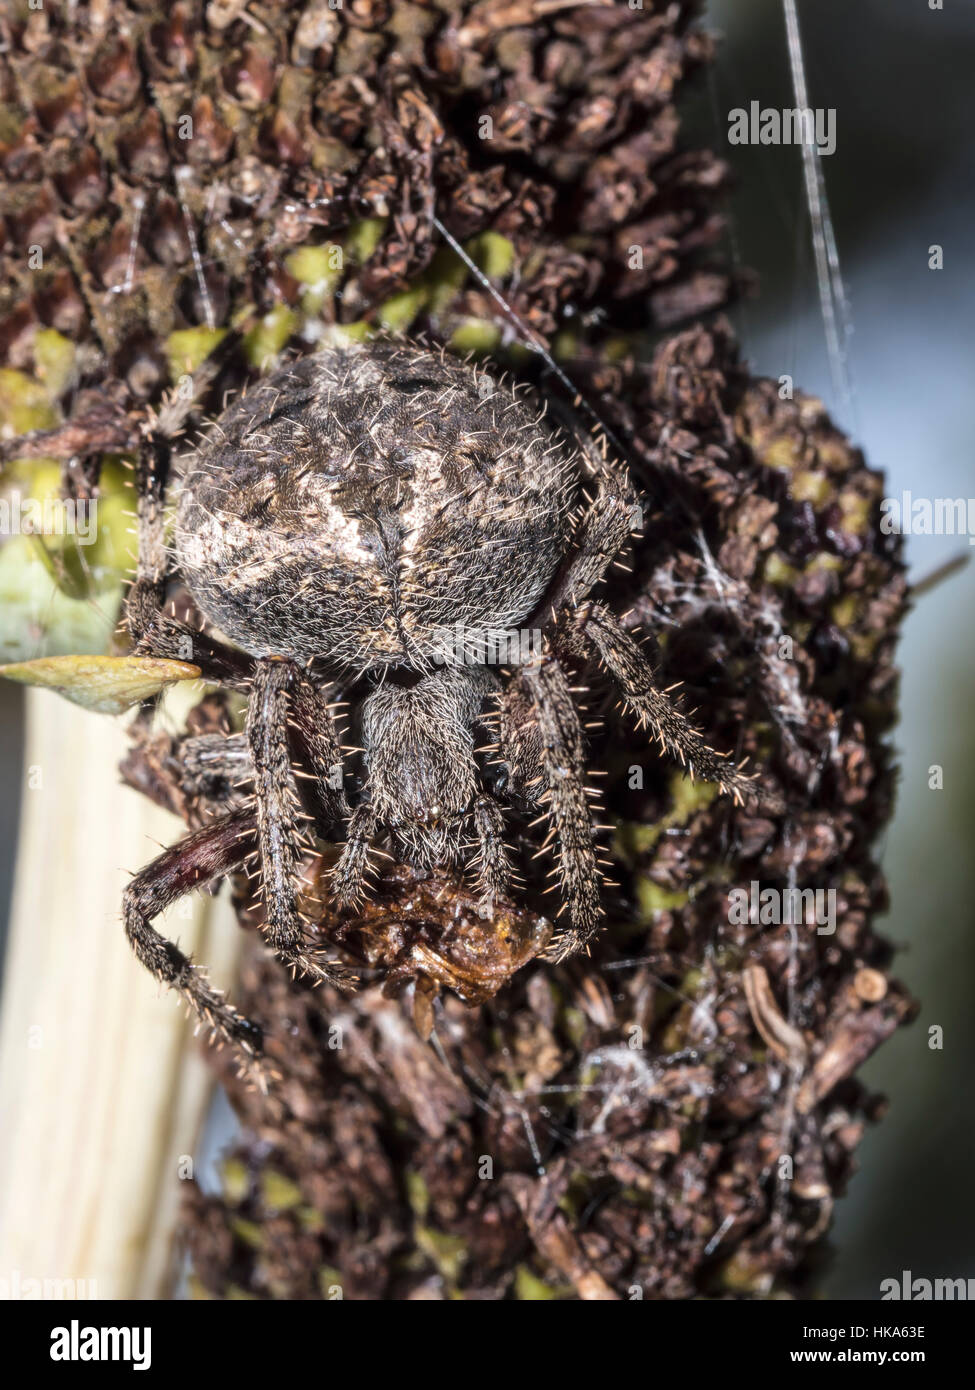 Common house spider,Parasteatoda tepidariorum, referred to internationally as the American house spider Stock Photo